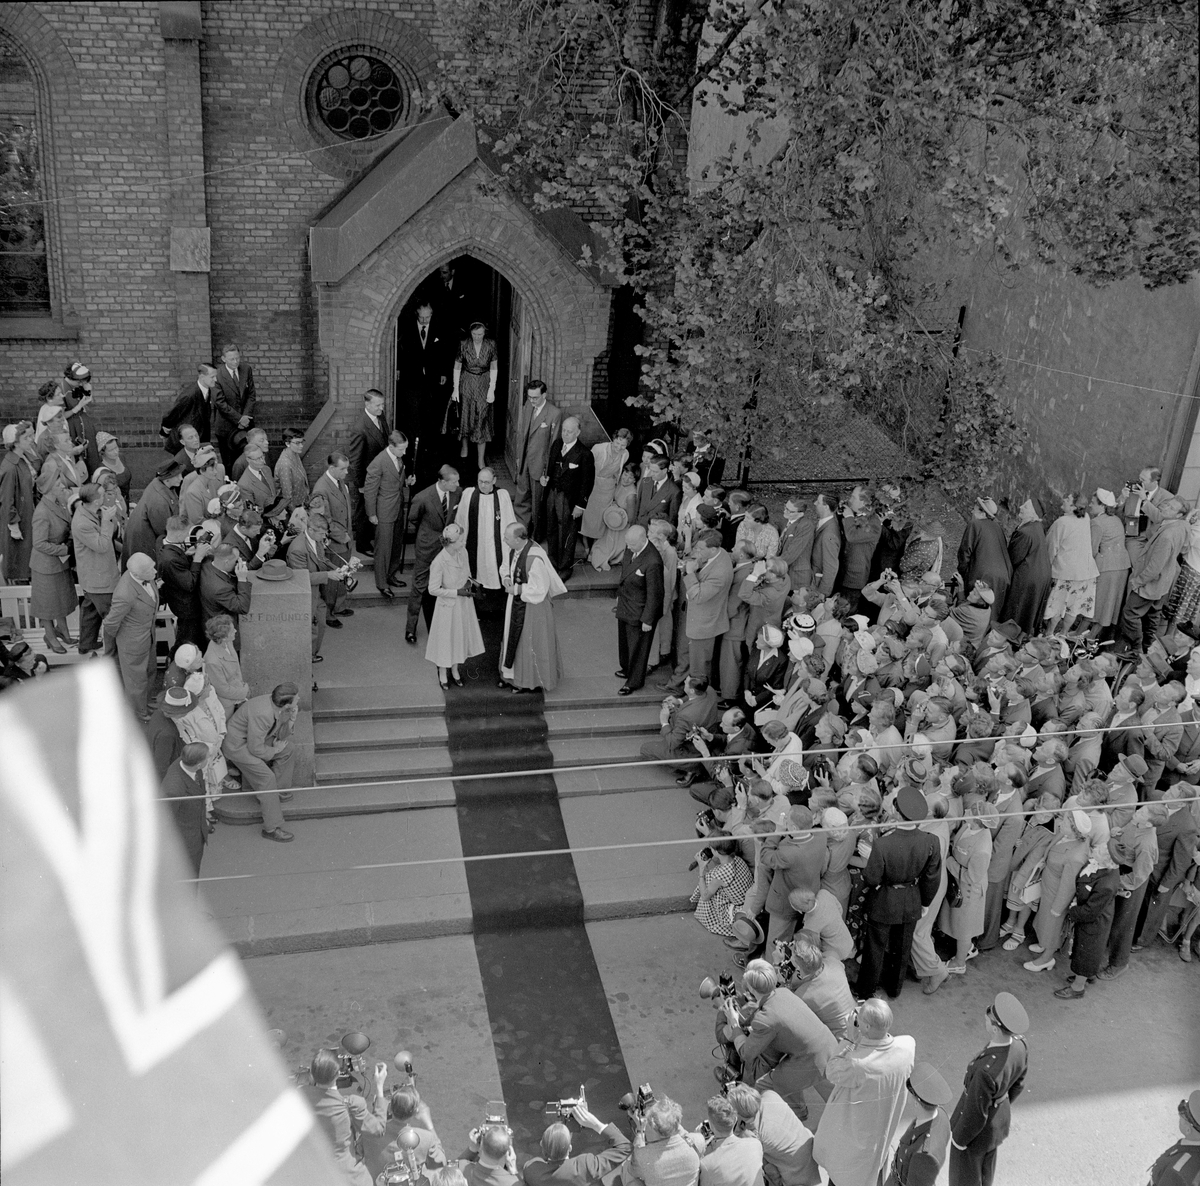 Dronning Elizabeth II på statsbesøk i Norge. Her forlater Dronningen og Prins Philip St. Edmunds Church i Møllergata 30 i Oslo etter en gudstjeneste og tar farvel med biskop og pastor i kirken.